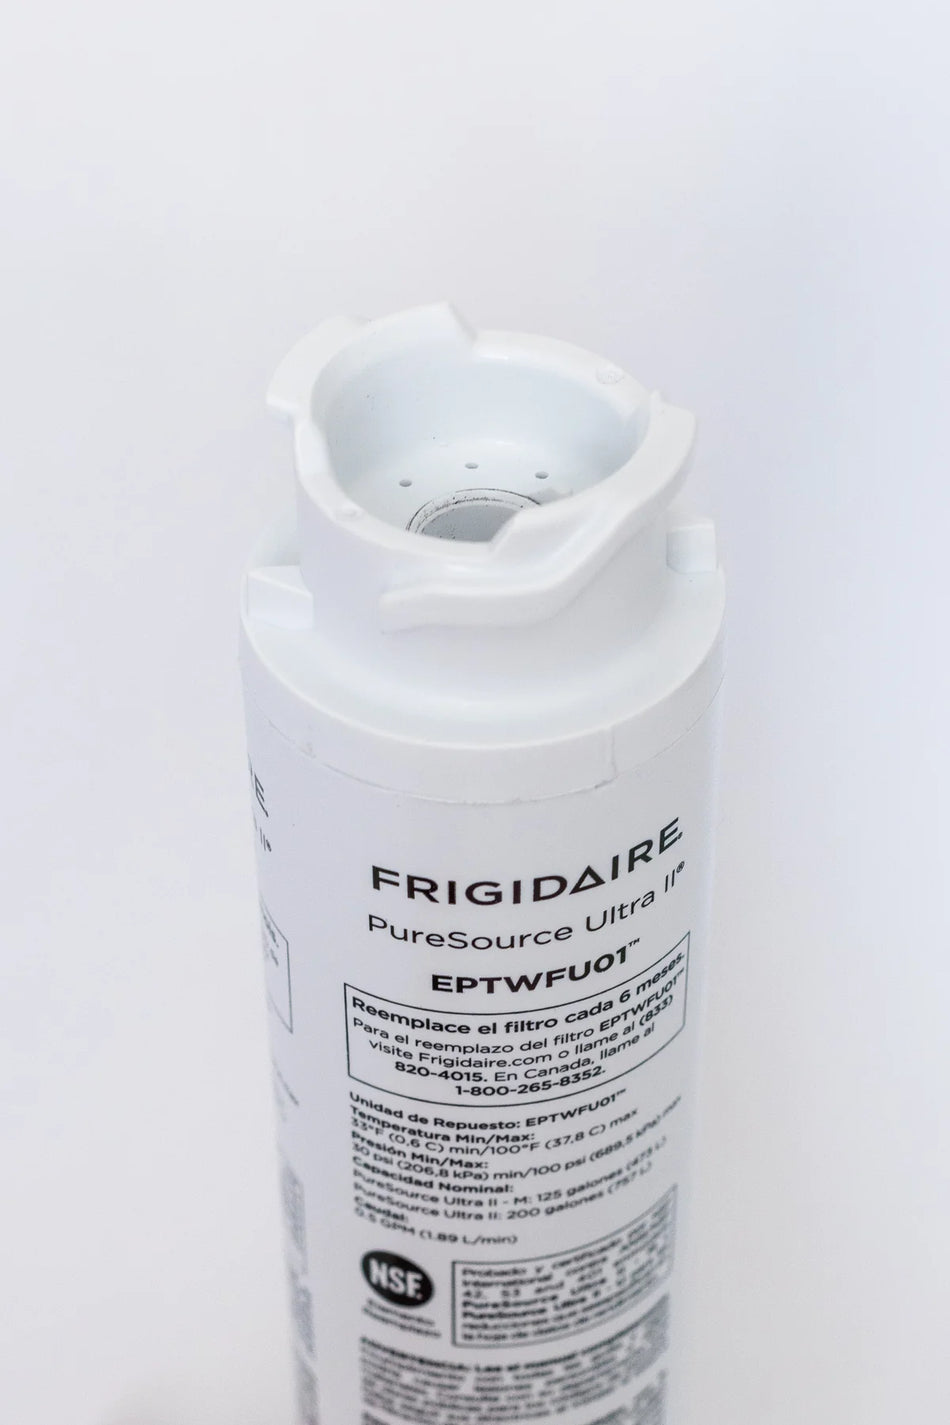 Frigidaire EPTWFU01 PureSource Ultra II Refrigerator Water Filter, 3 pack